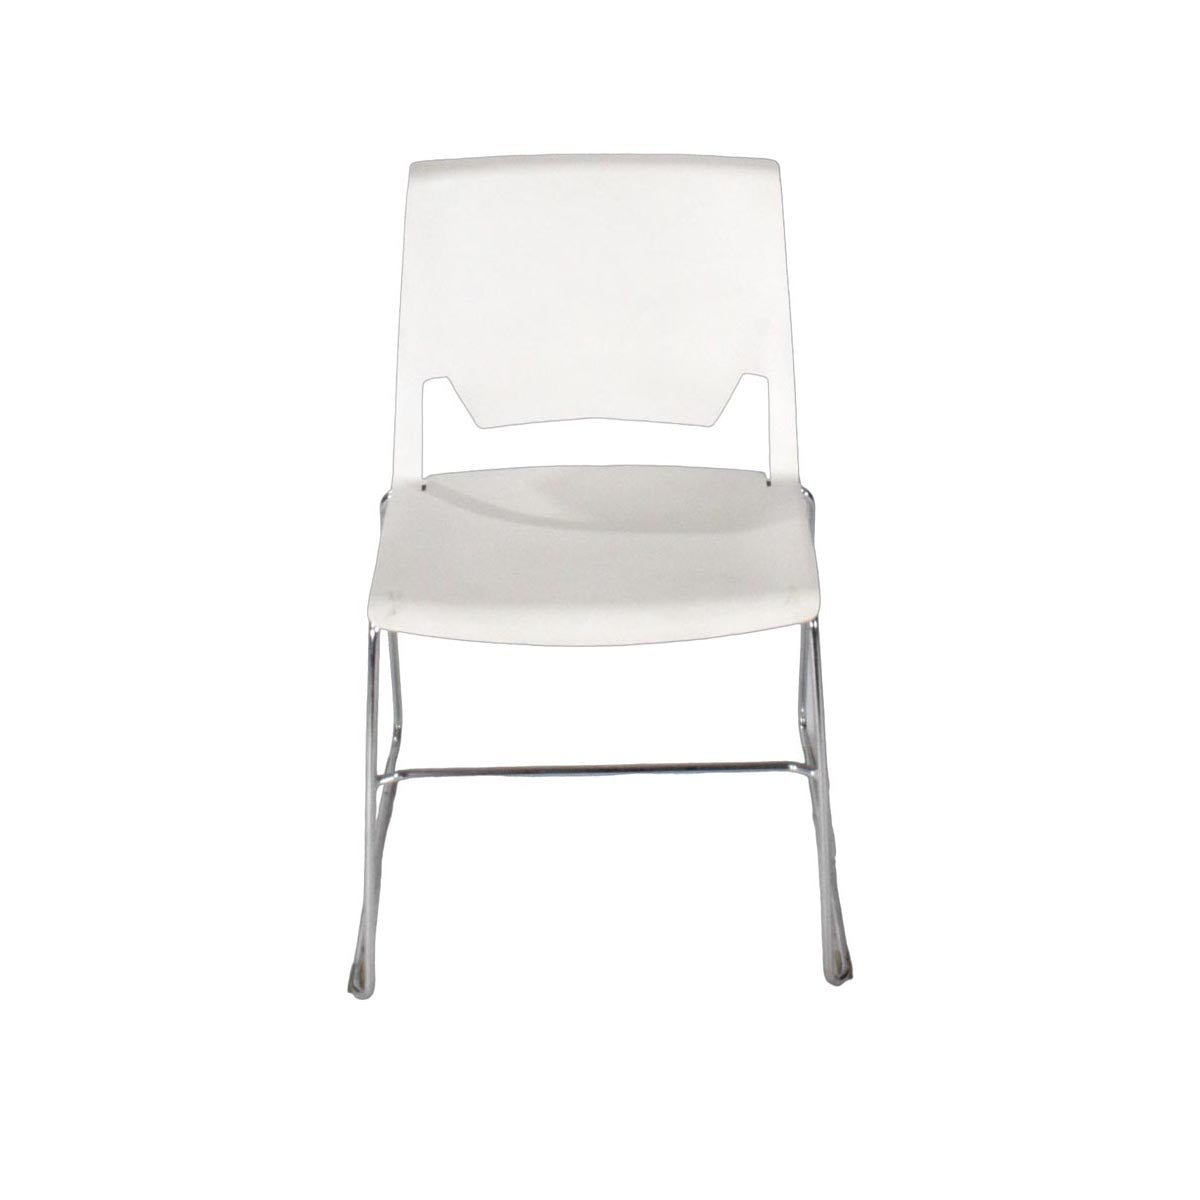 Haworth: Very Comforto 62 Chair in White - Refurbished